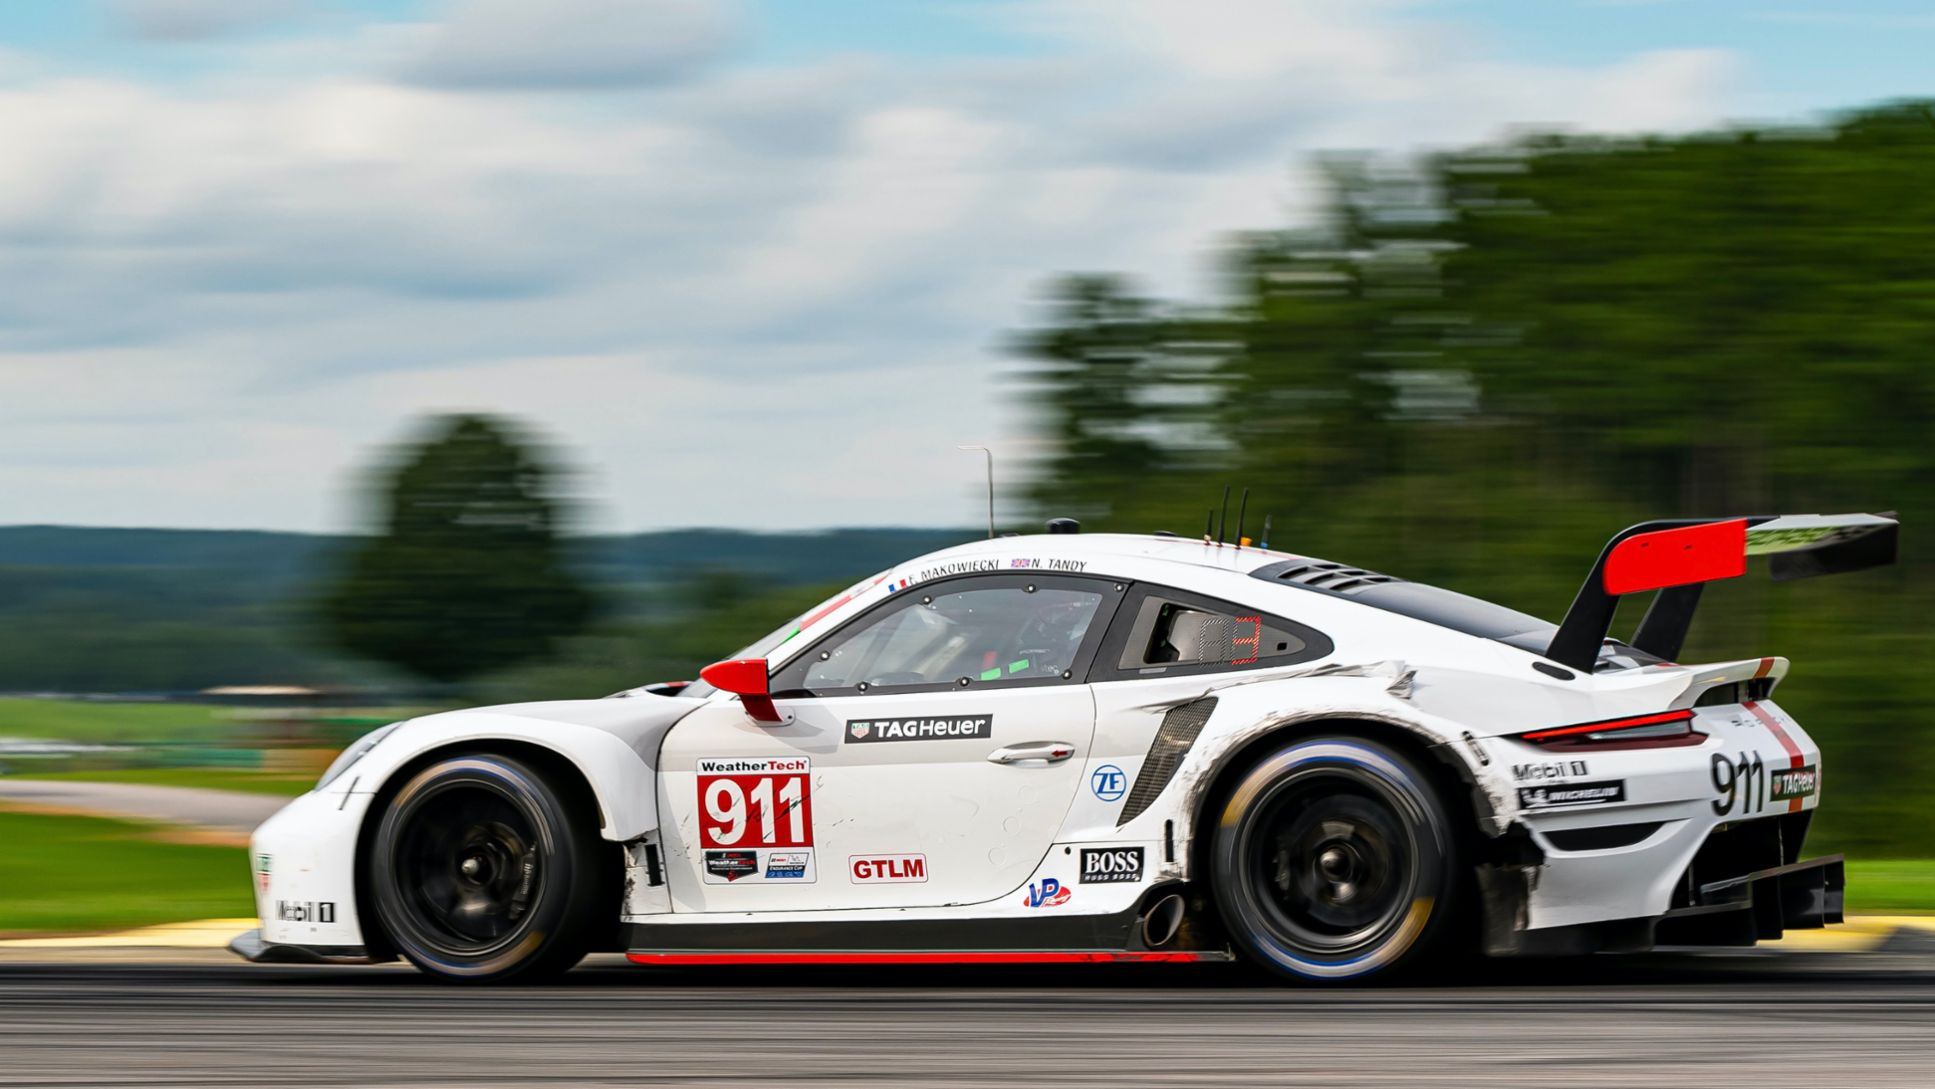 911 RSR, IMSA WeatherTech SportsCar Championship, Round 5, Alton, USA, Race, 2020, Porsche AG